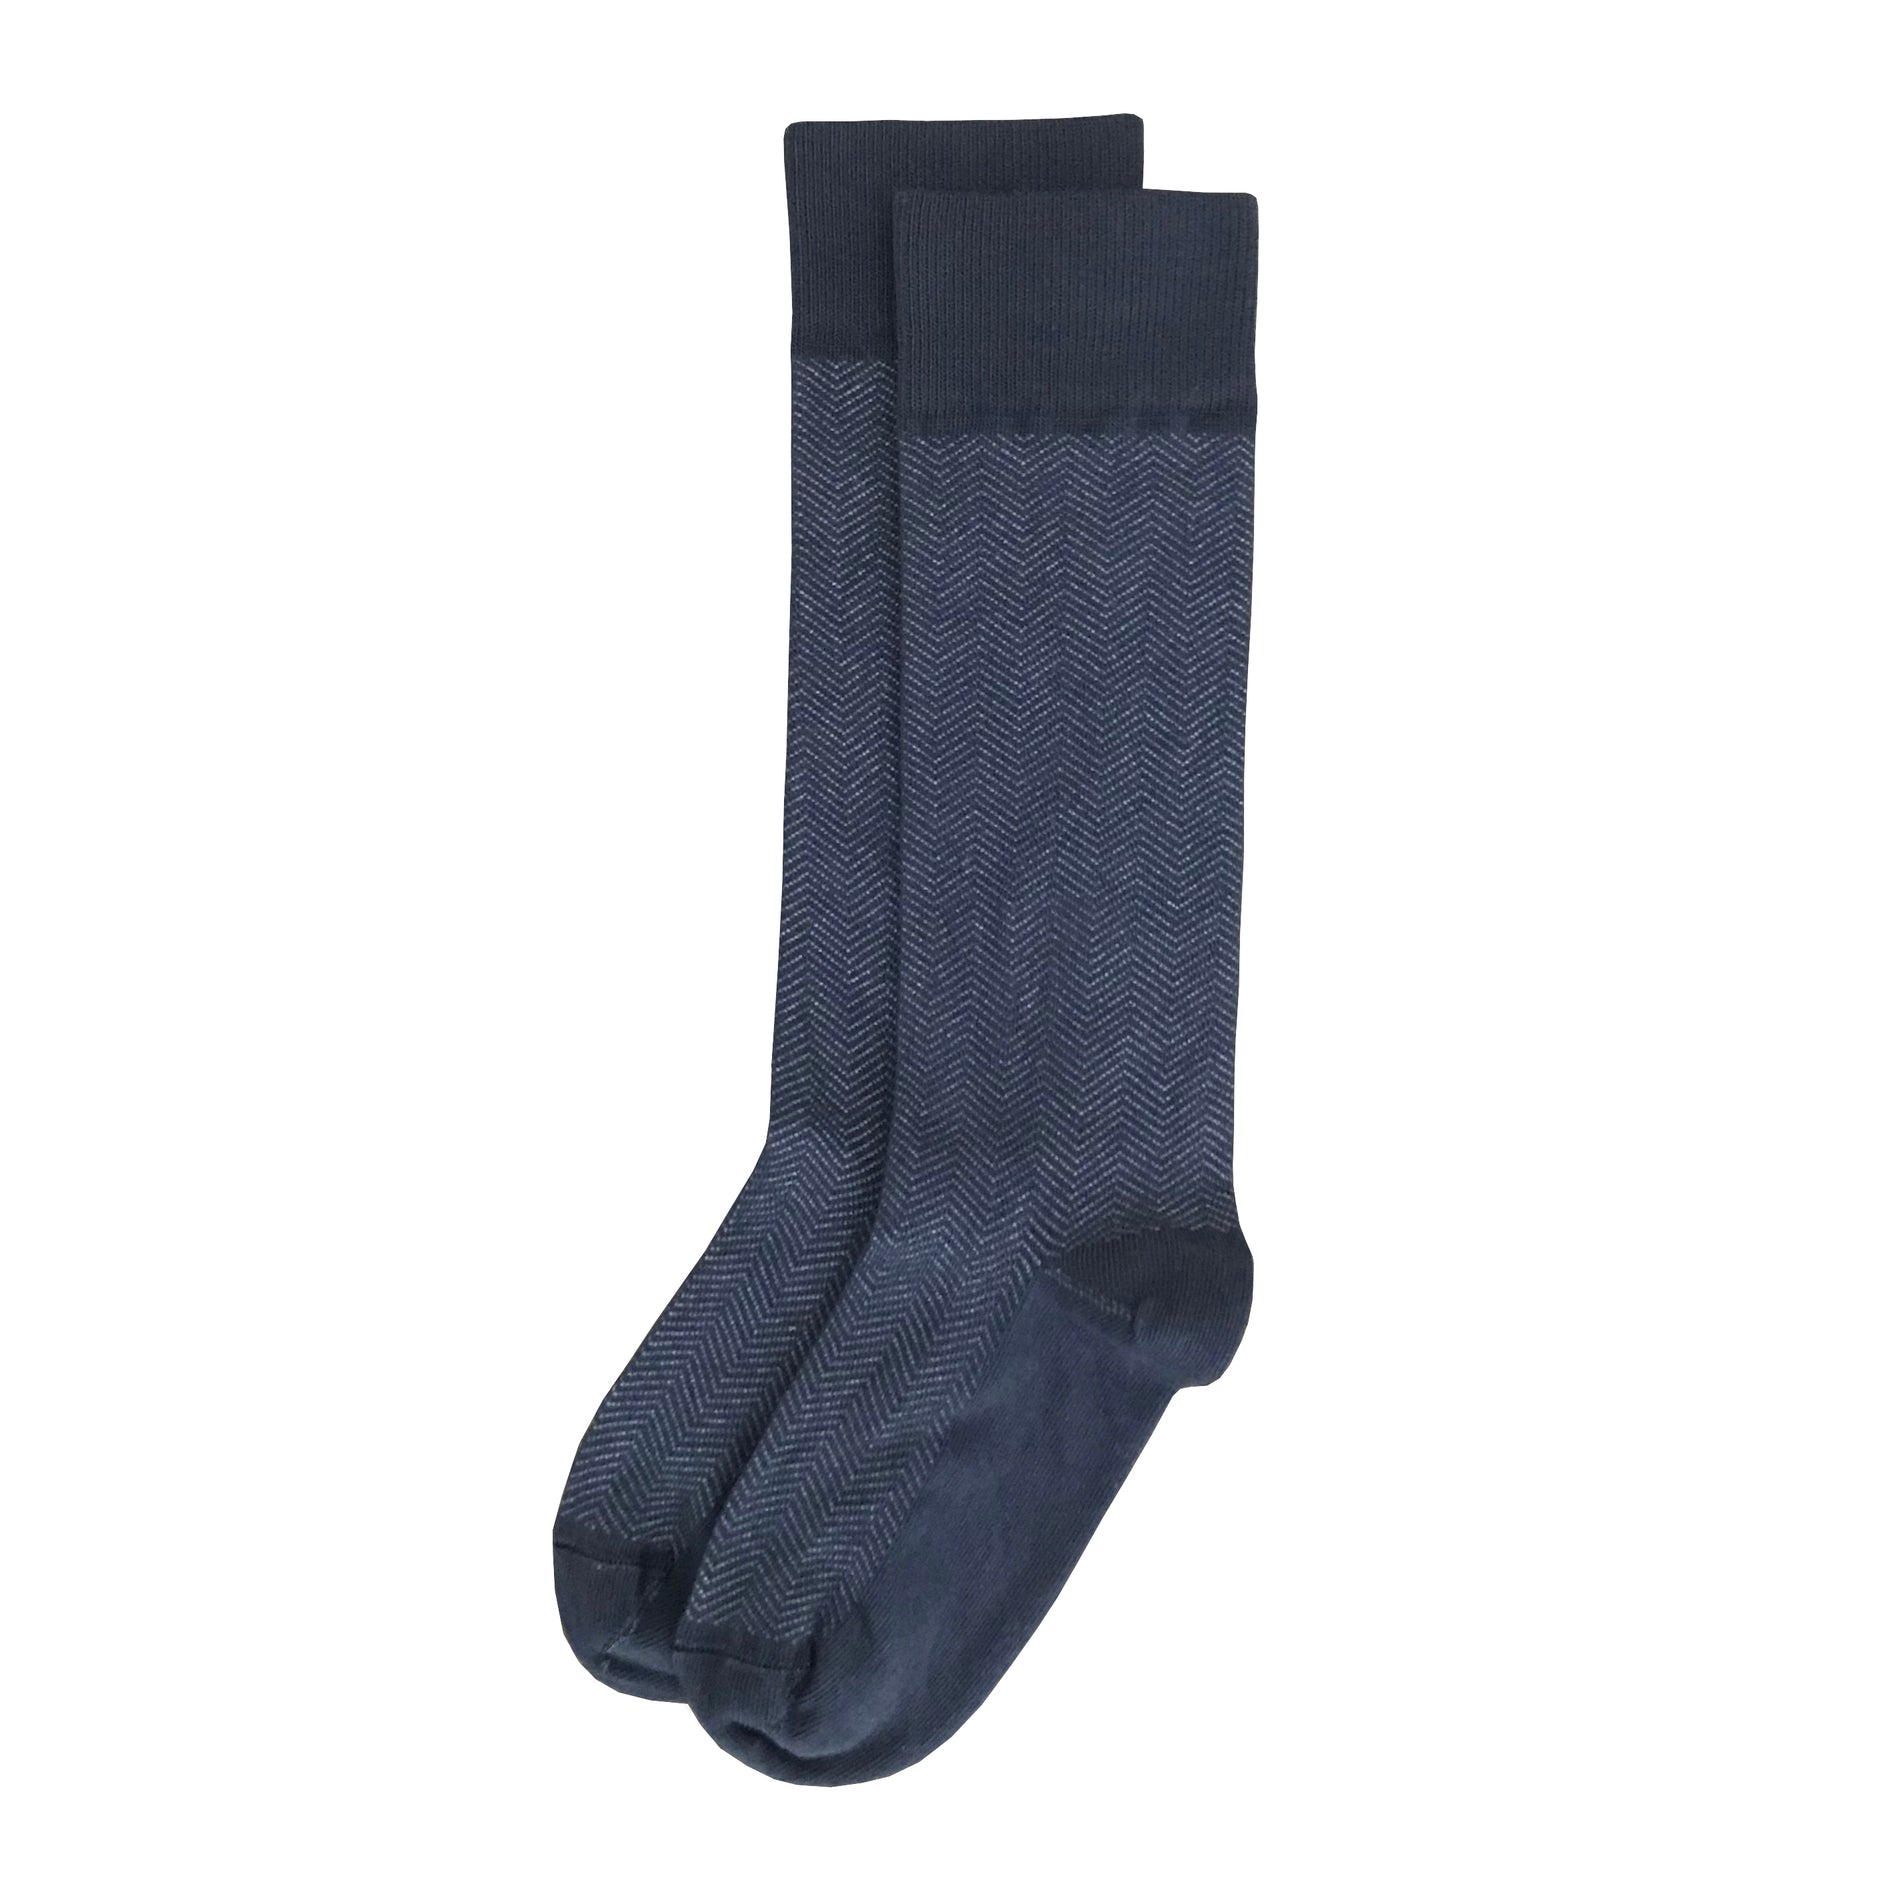 Premium Solids - Boldfoot Socks